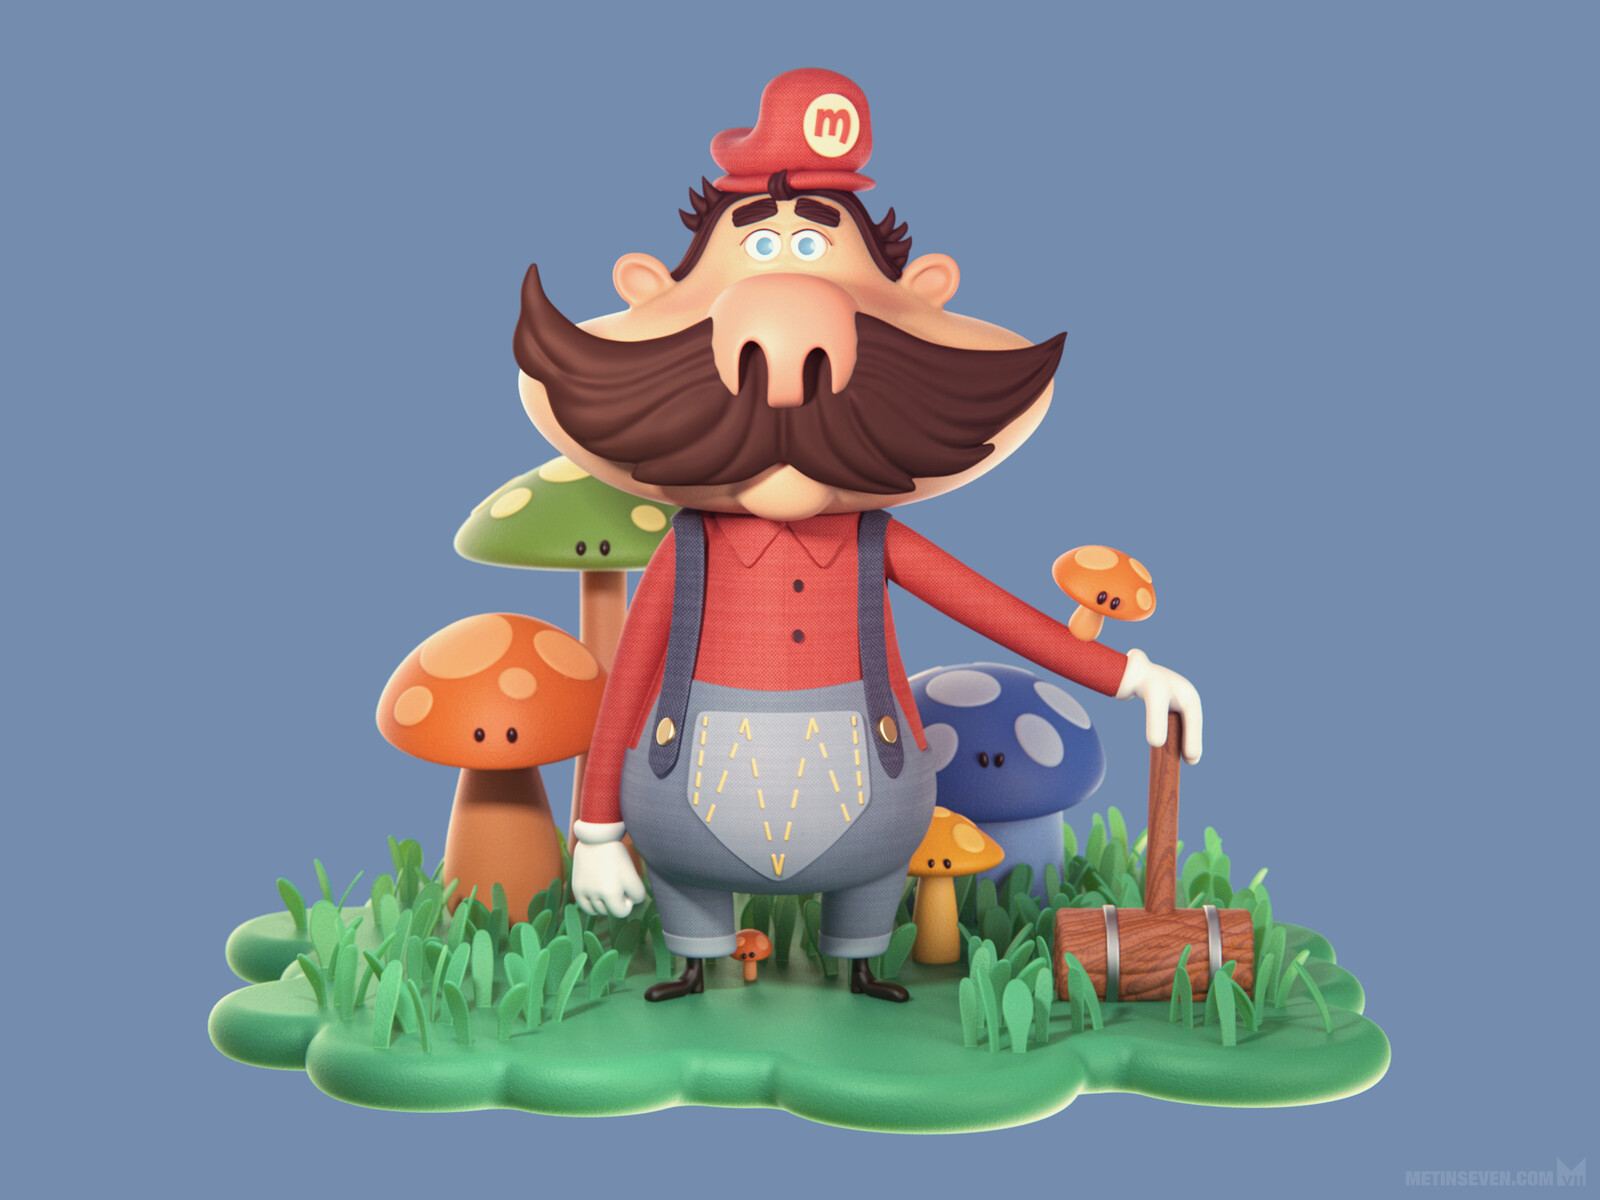 Mario and friends 🍄 | Concept: Dave Mottram